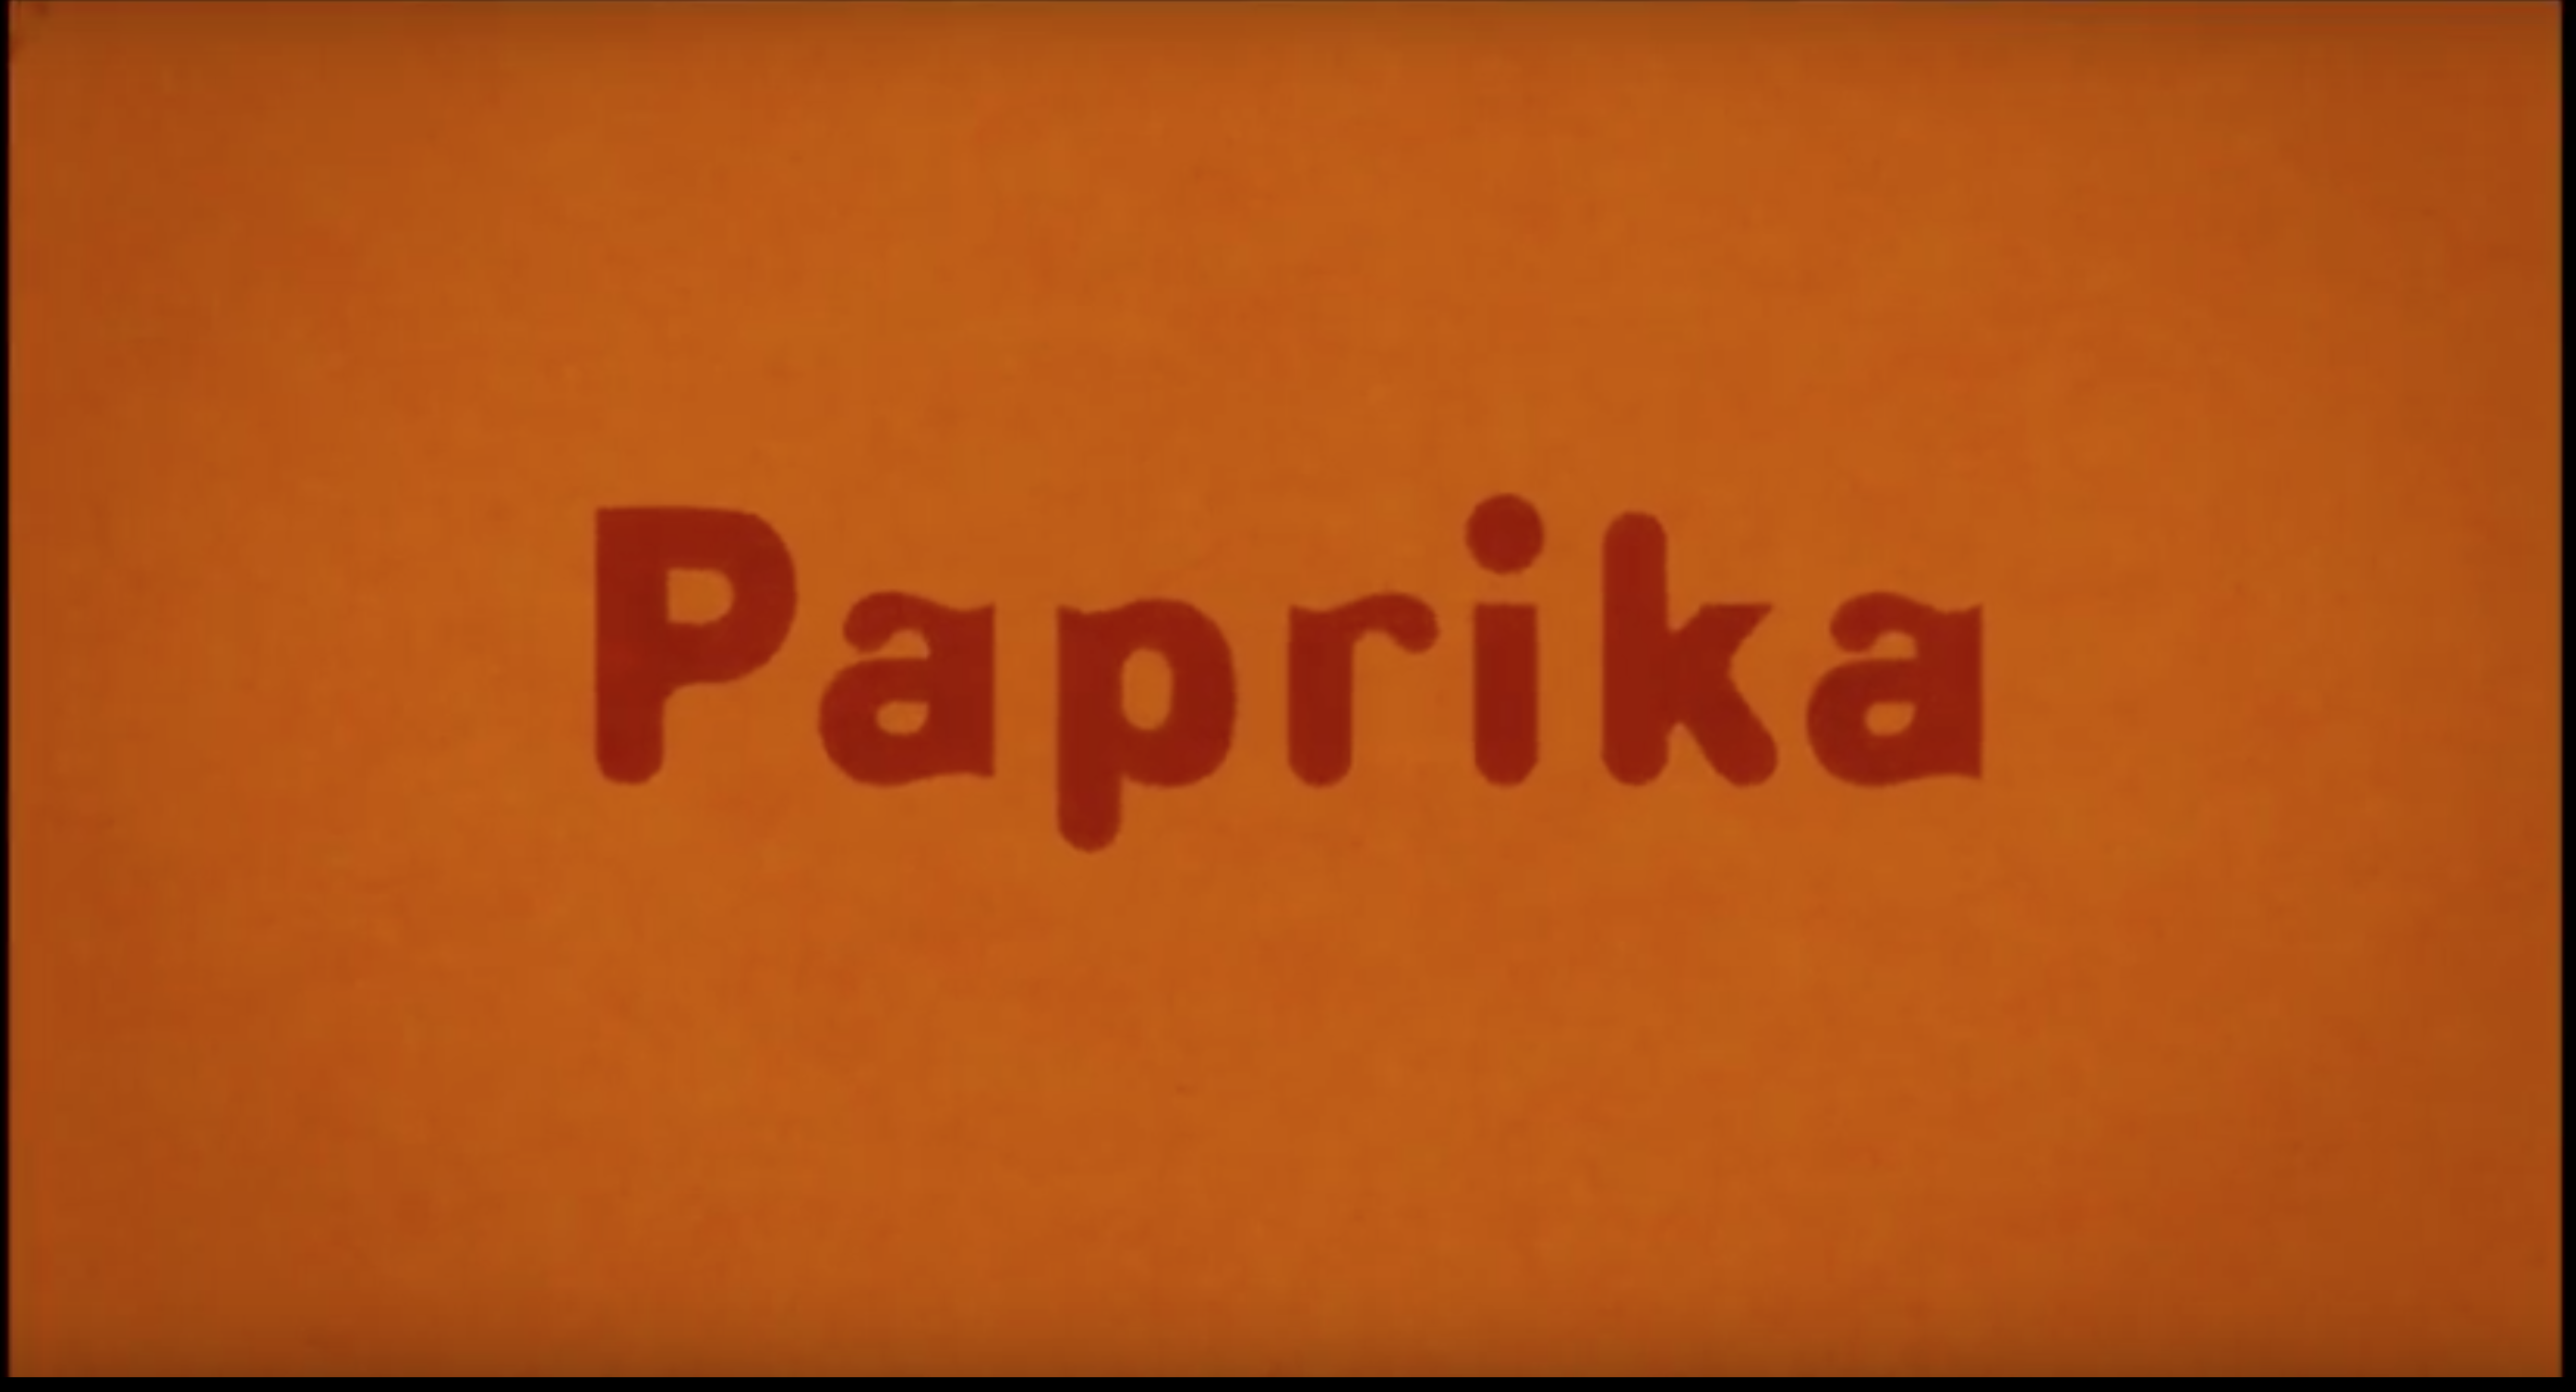 Paprika – Sound Design